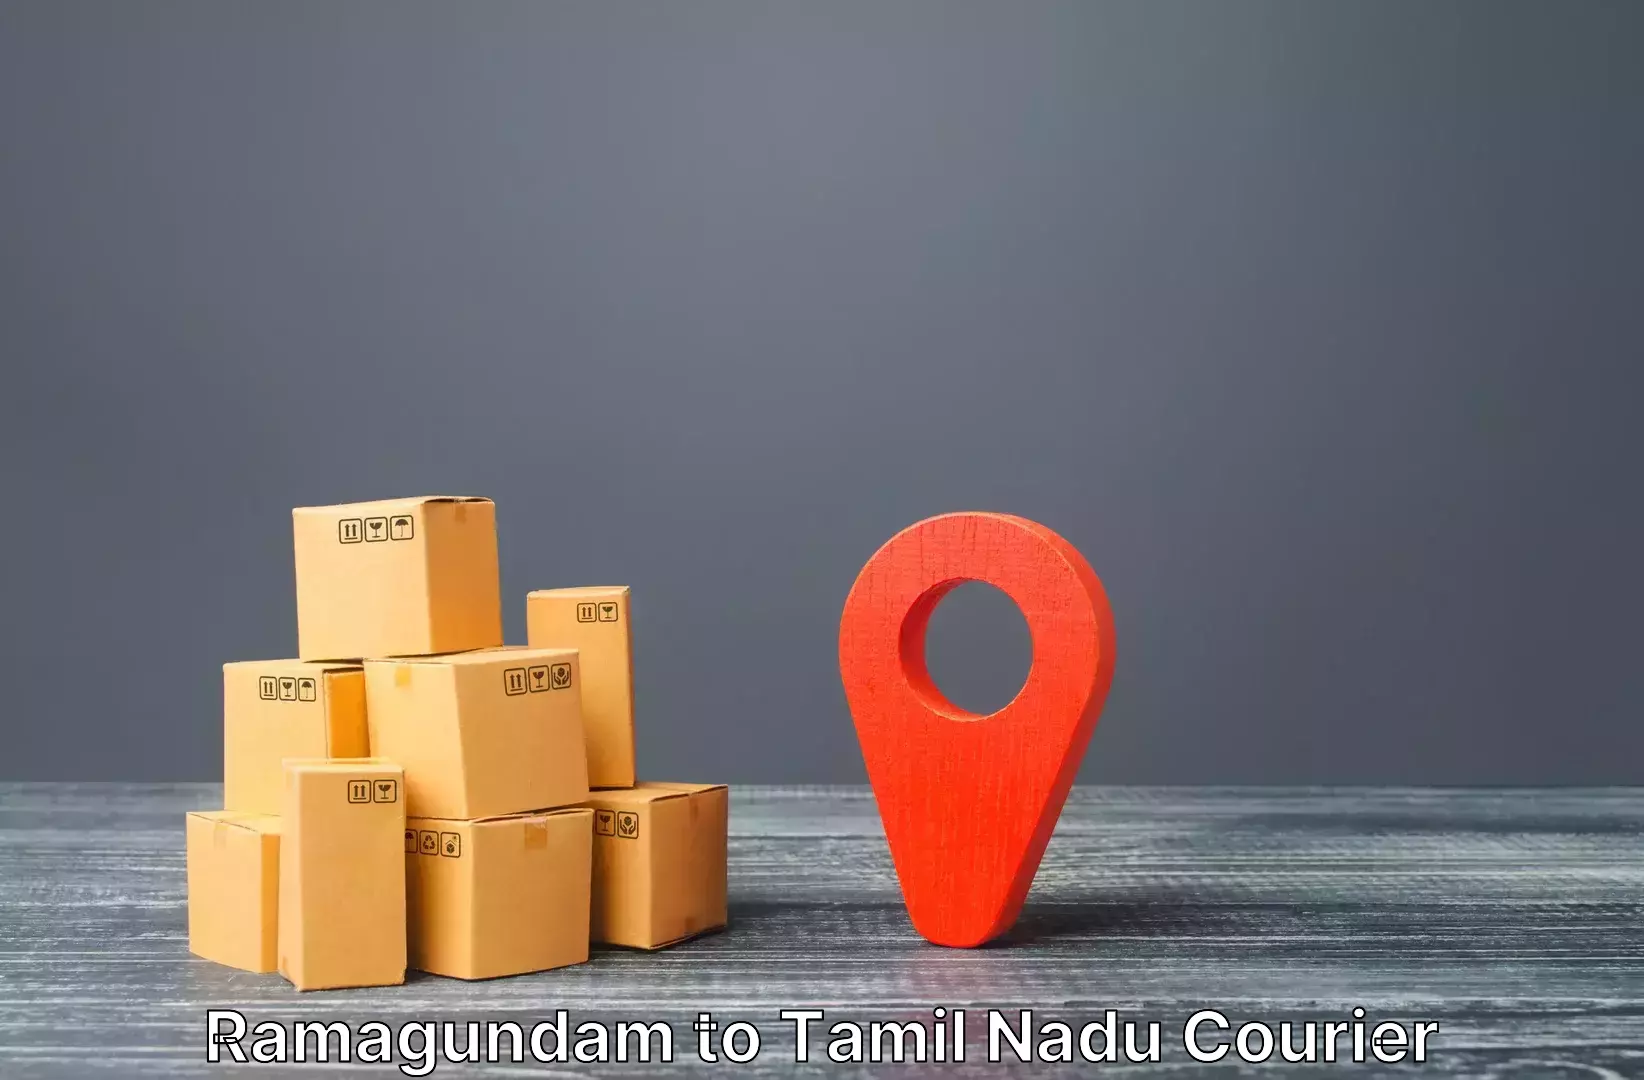 Luggage transport service Ramagundam to Ennore Port Chennai